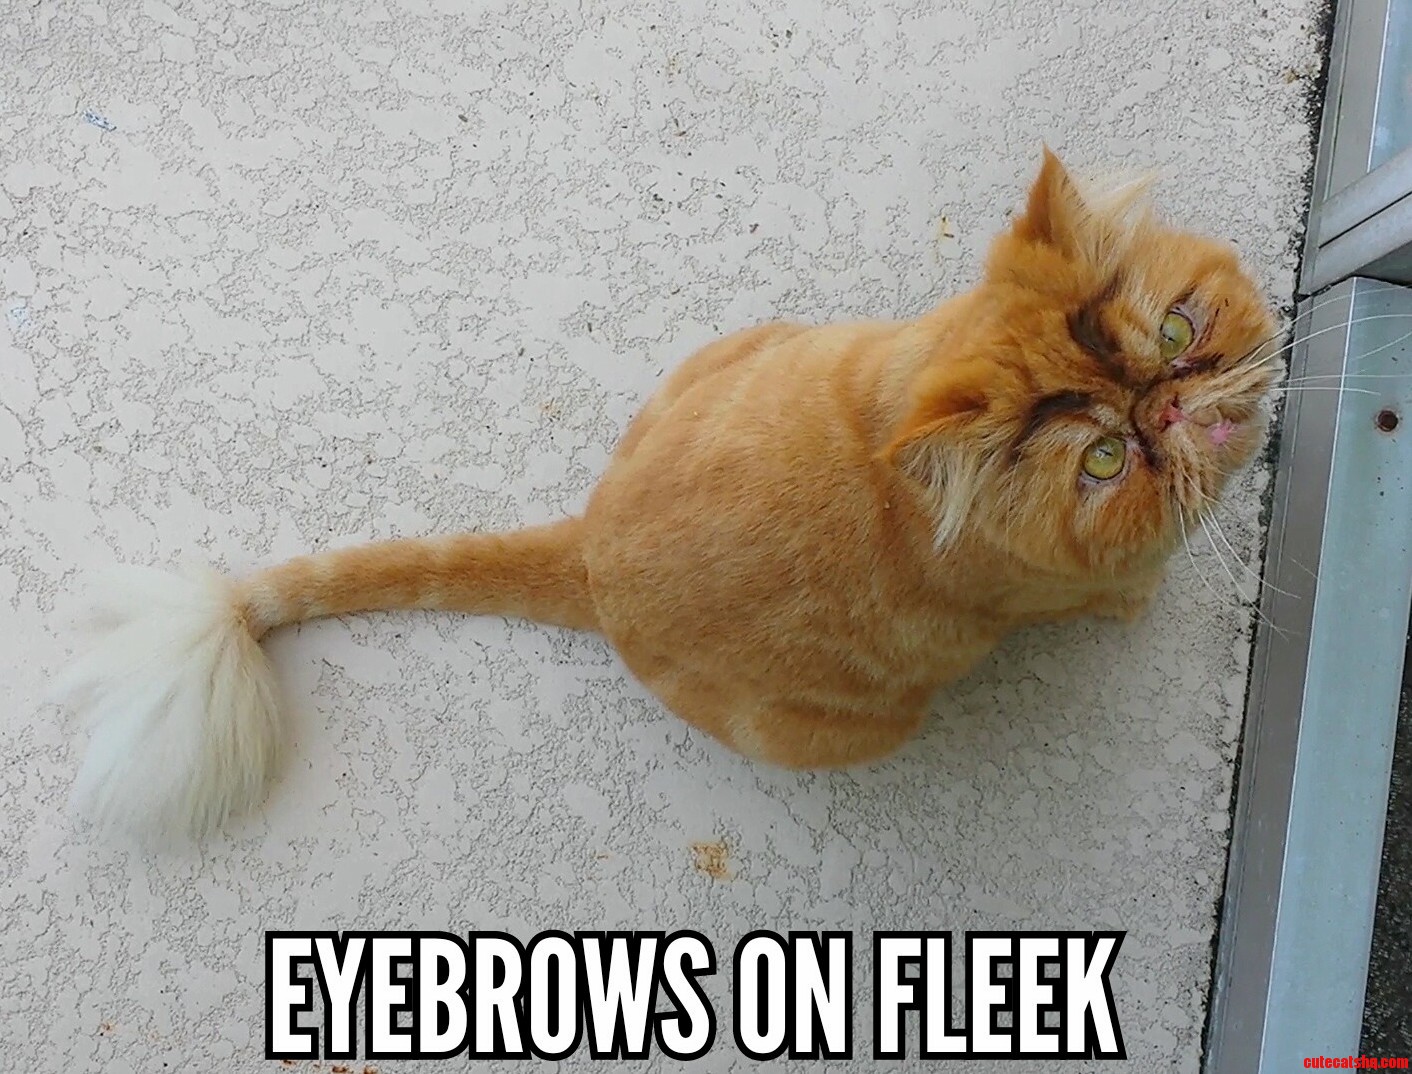 Eyebrows on fleek cat